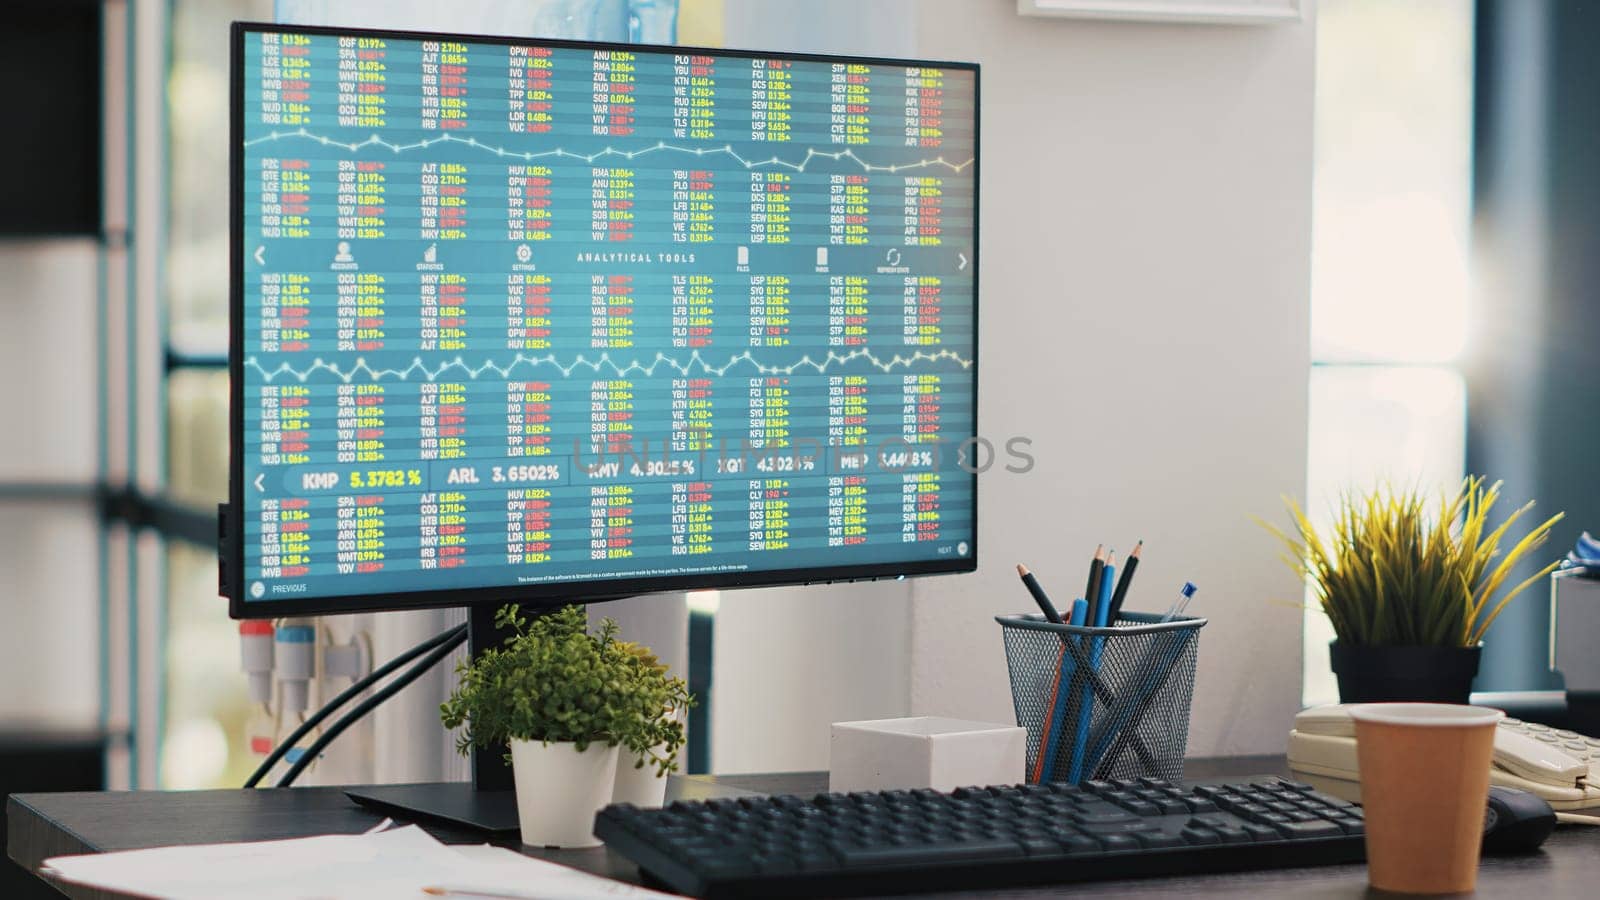 Stock trading economic analytics figures on PC screen, close up shot by DCStudio